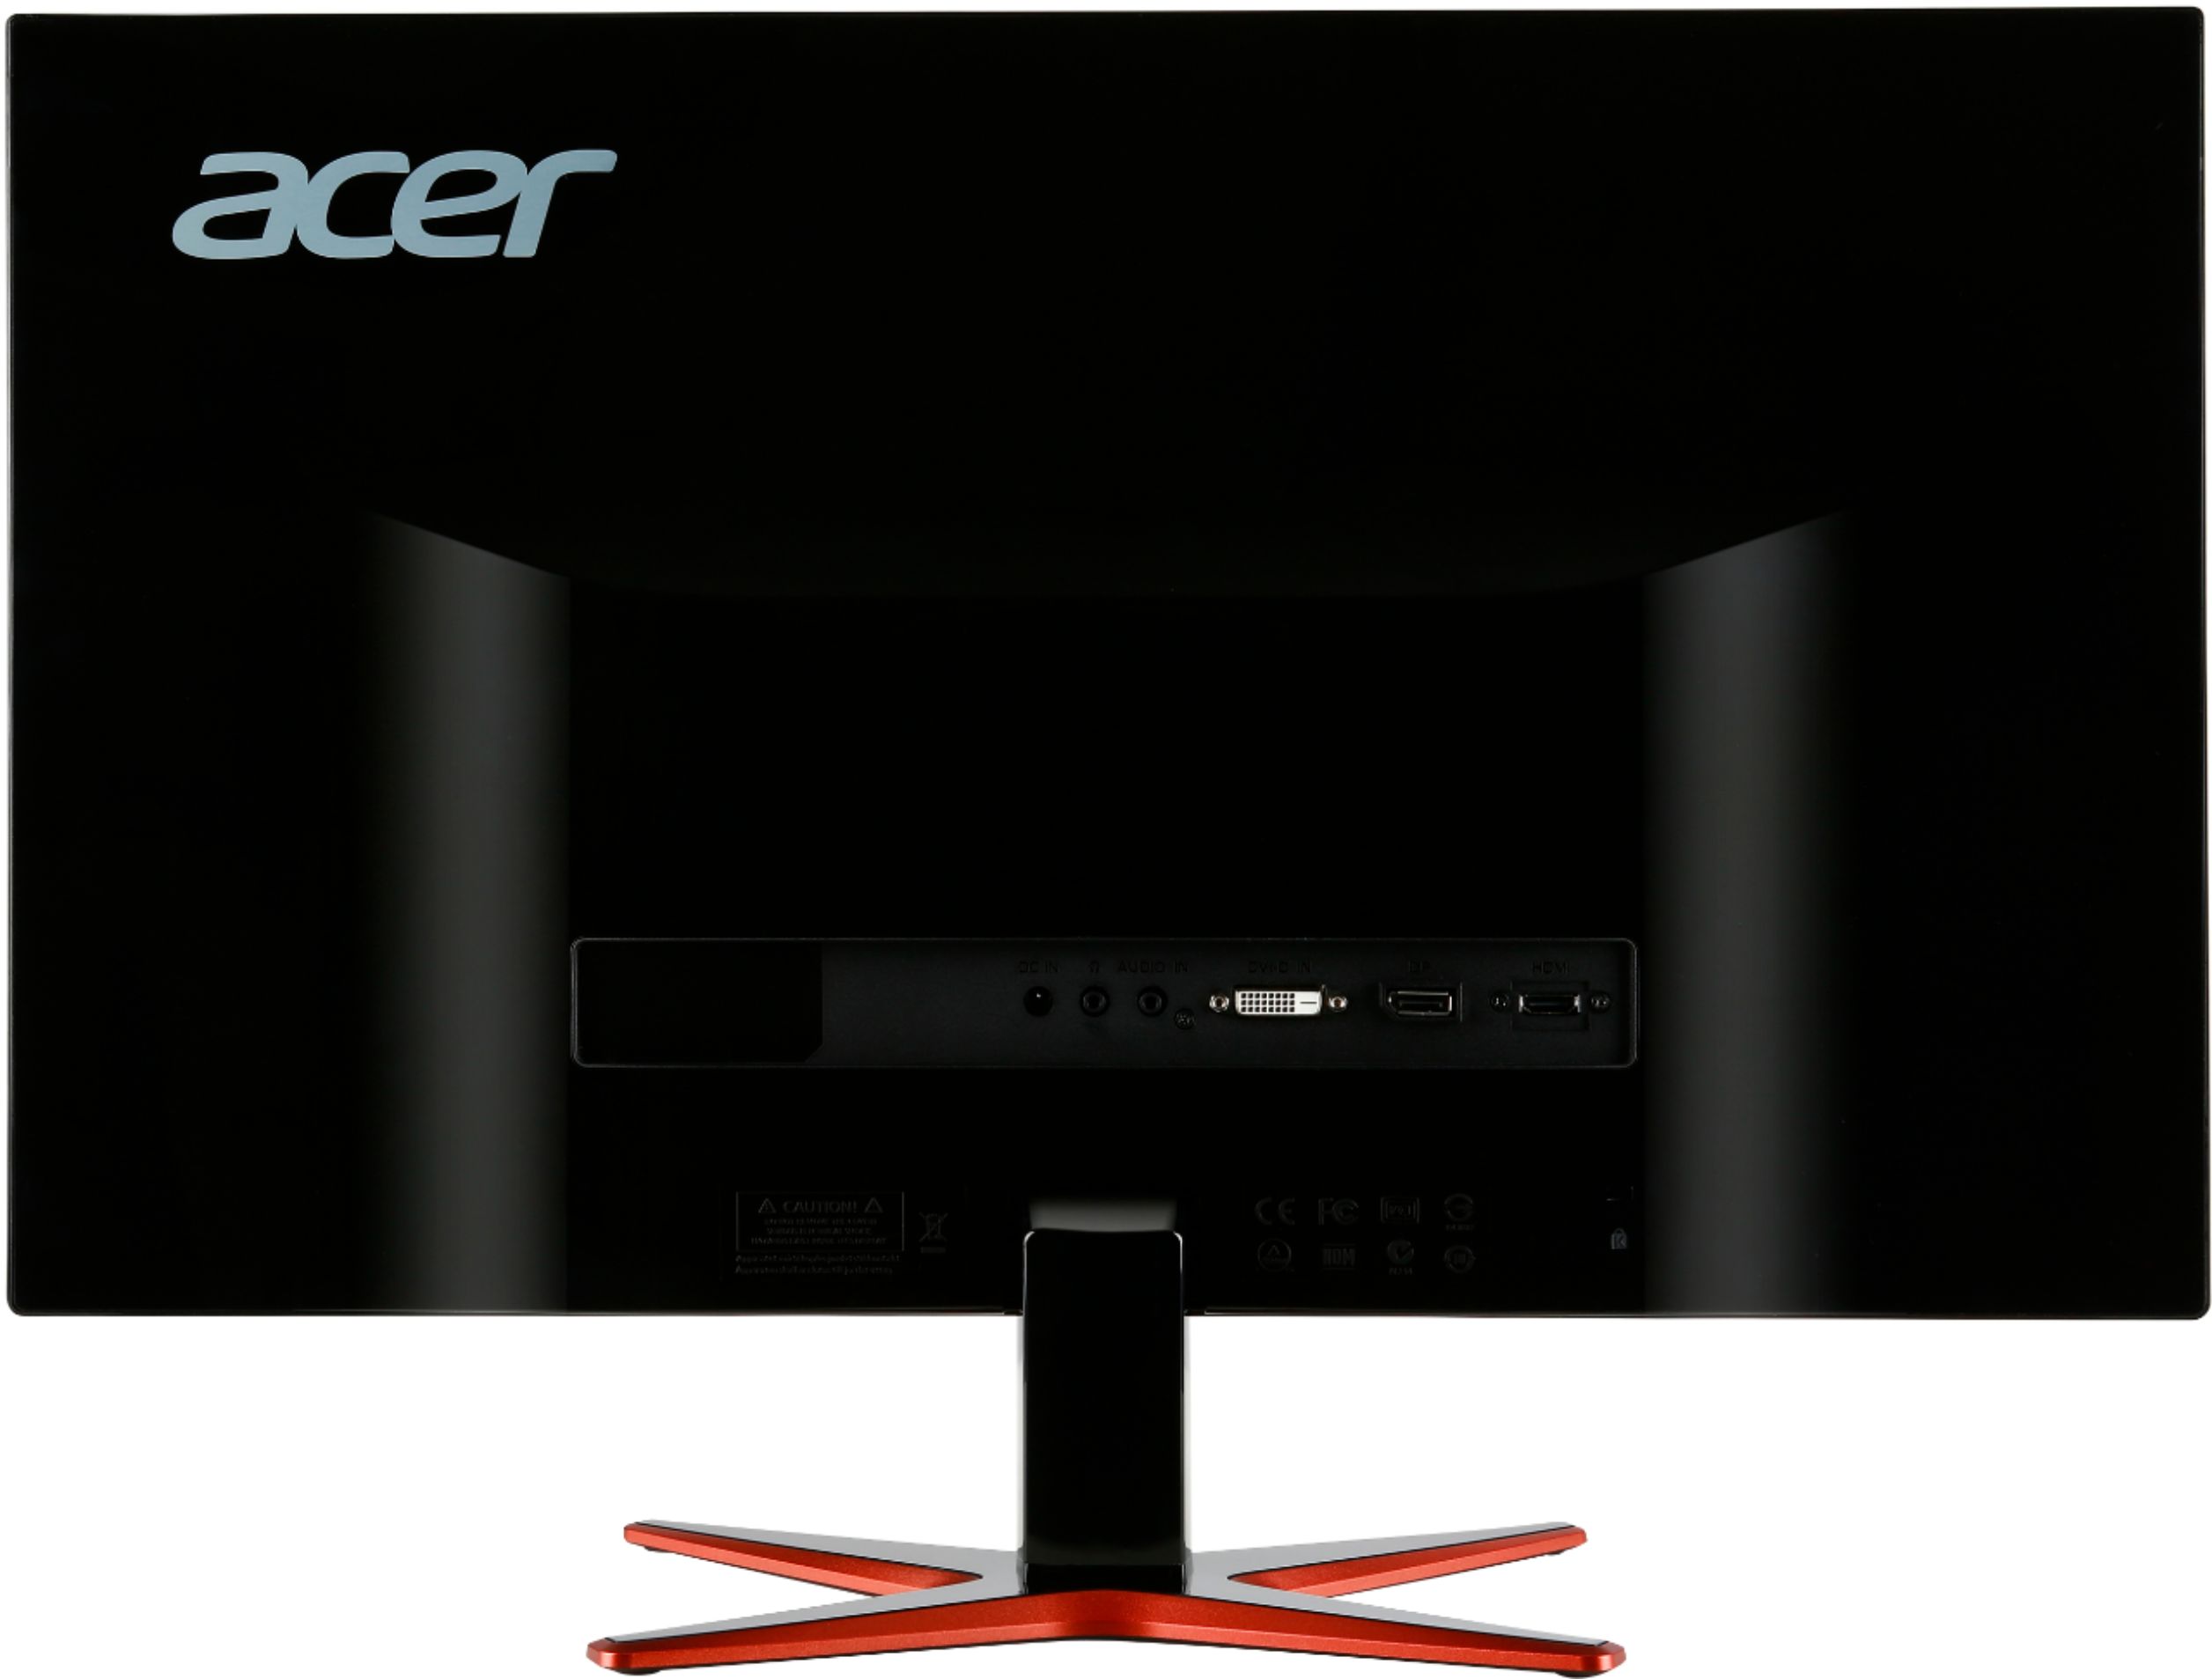 Back View: Acer - Geek Squad Certified Refurbished XG270HU 27" LED QHD FreeSync/G-SYNC Monitor - Black/Orange